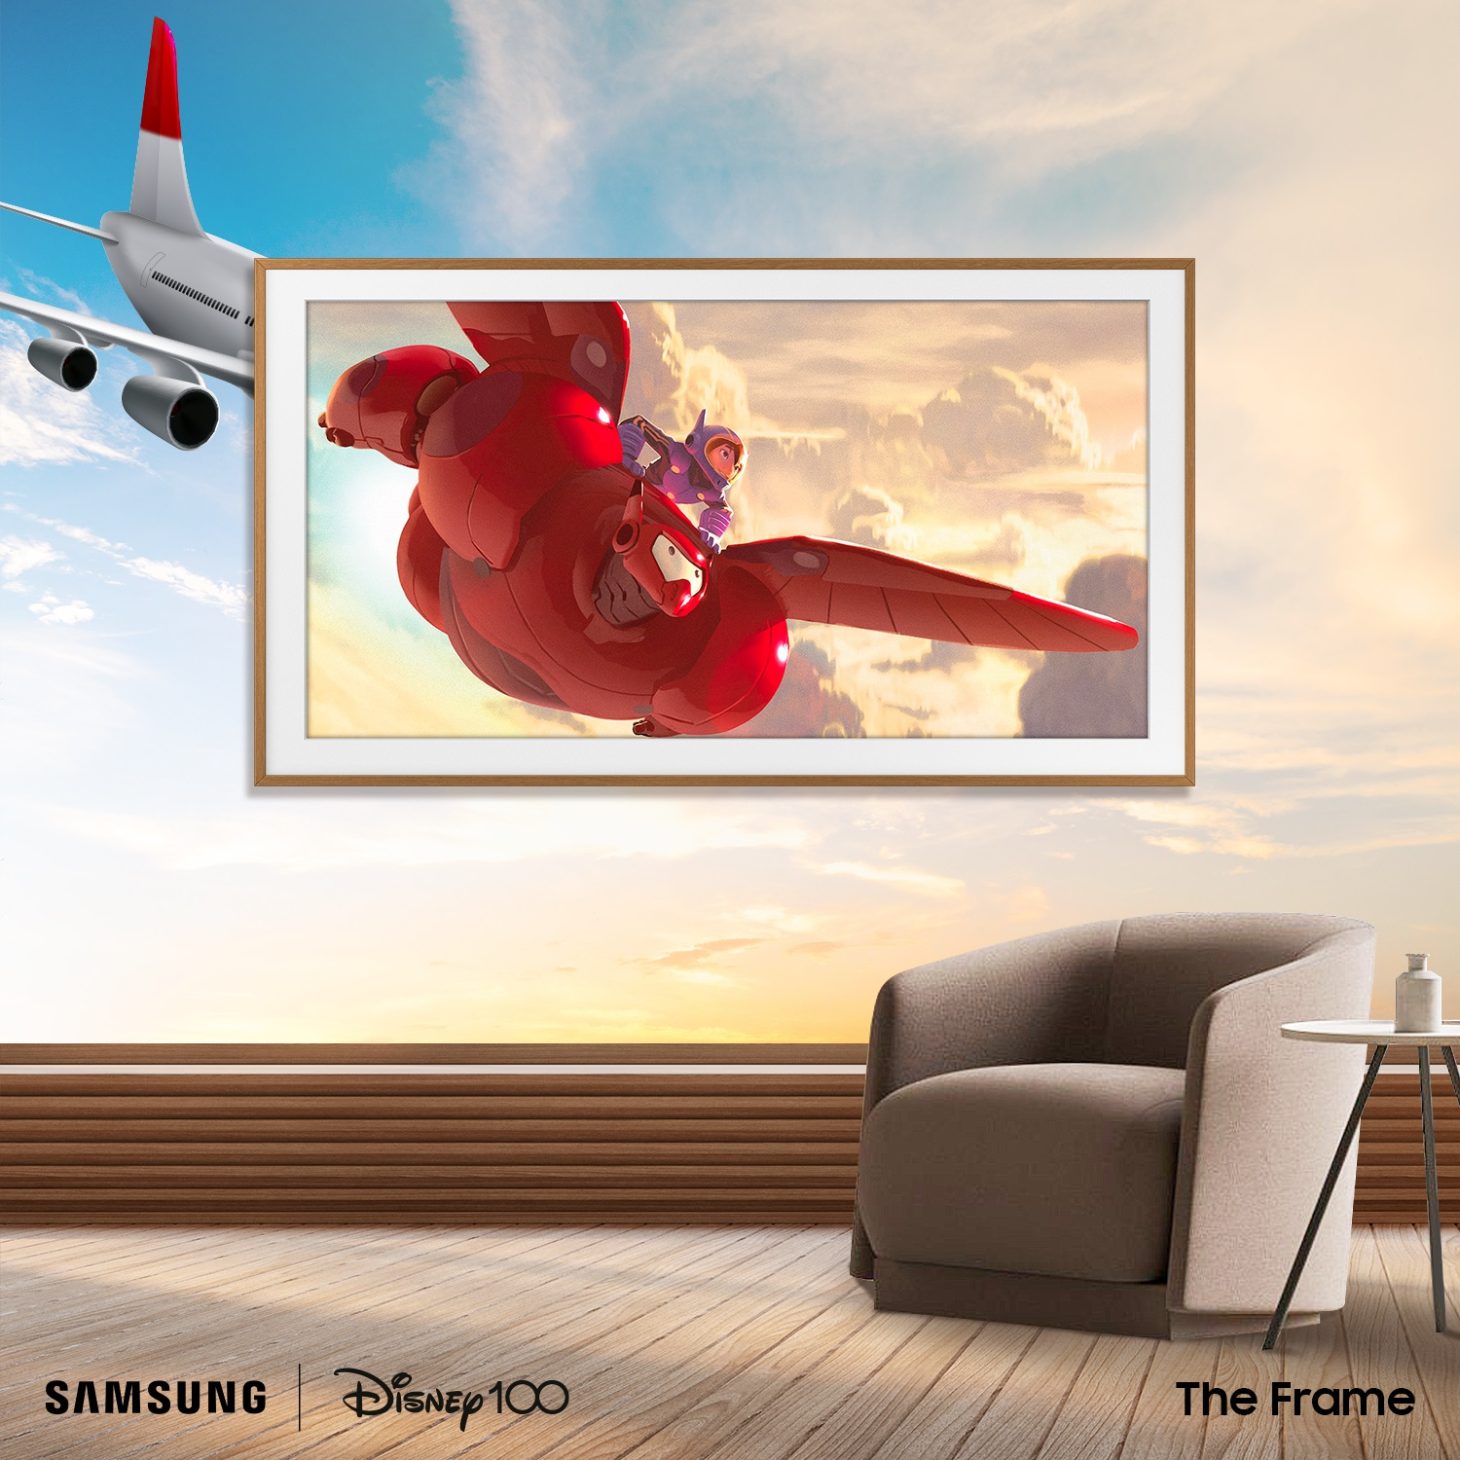 Disney 100 tuổi, Samsung ra The Frame phiên bản đặc biệt - SS AV 2023 THE FRAME FB Post 16 Hinh 3